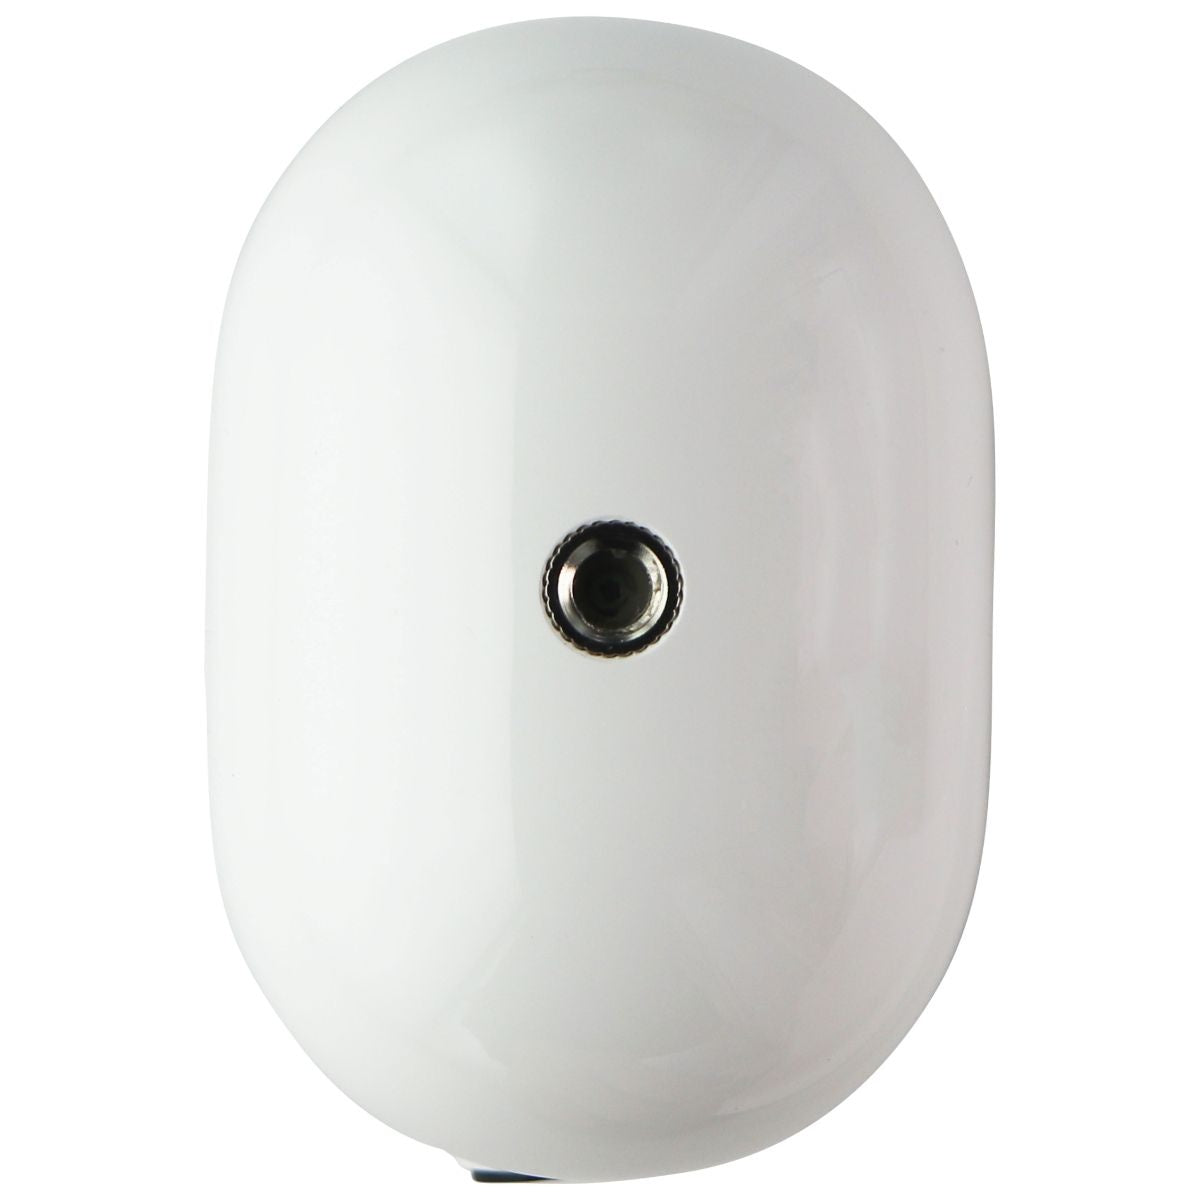 Arlo Essential Spotlight Wireless Security Camera - White - VMC2030 Home Surveillance - Security Cameras Arlo    - Simple Cell Bulk Wholesale Pricing - USA Seller